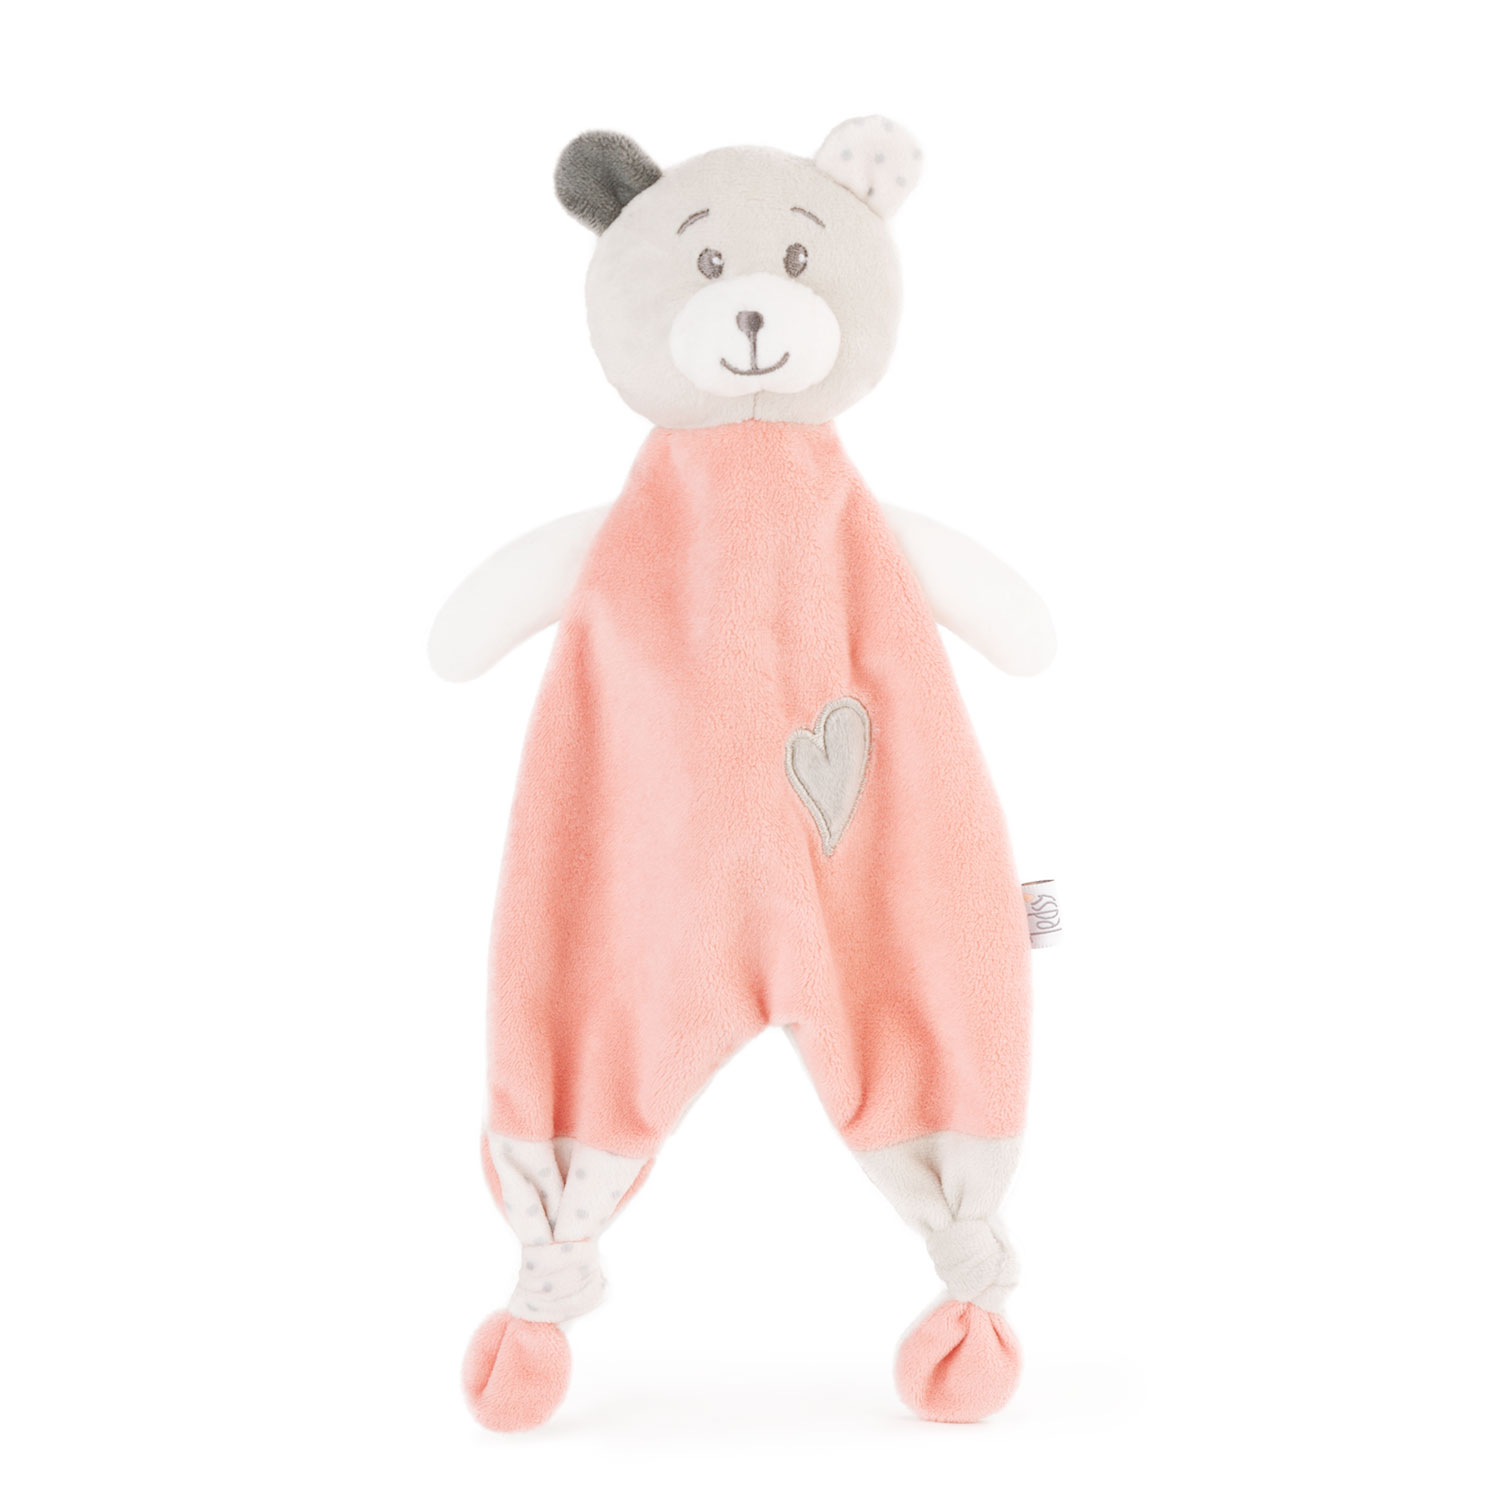 Soft toy bear - Pink